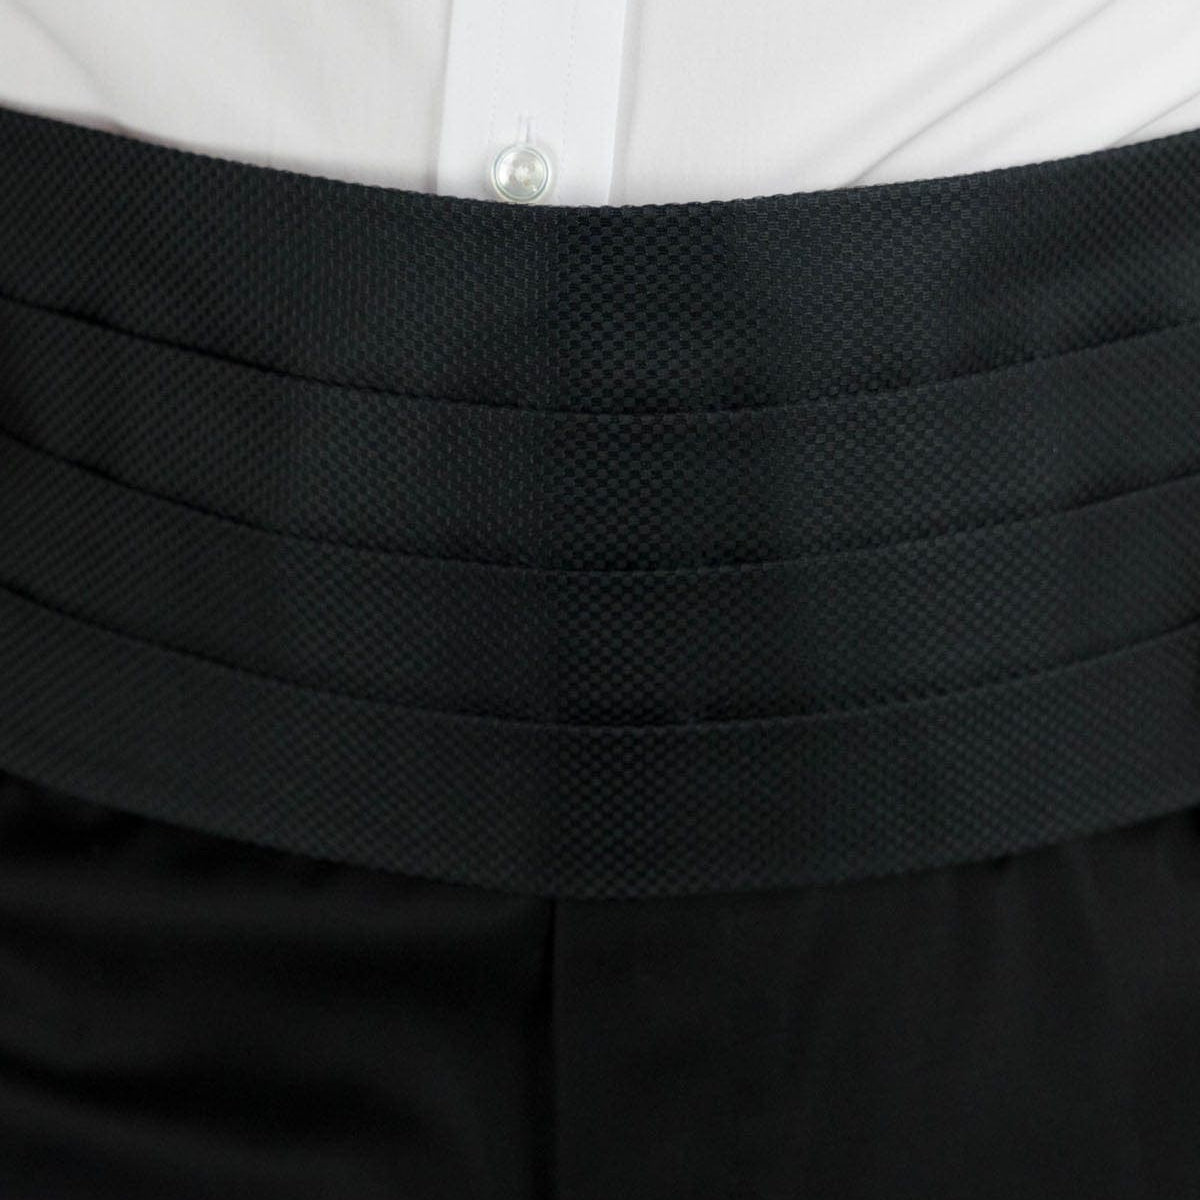 Plain Black Woollen Evening Trousers with Satin Stripe